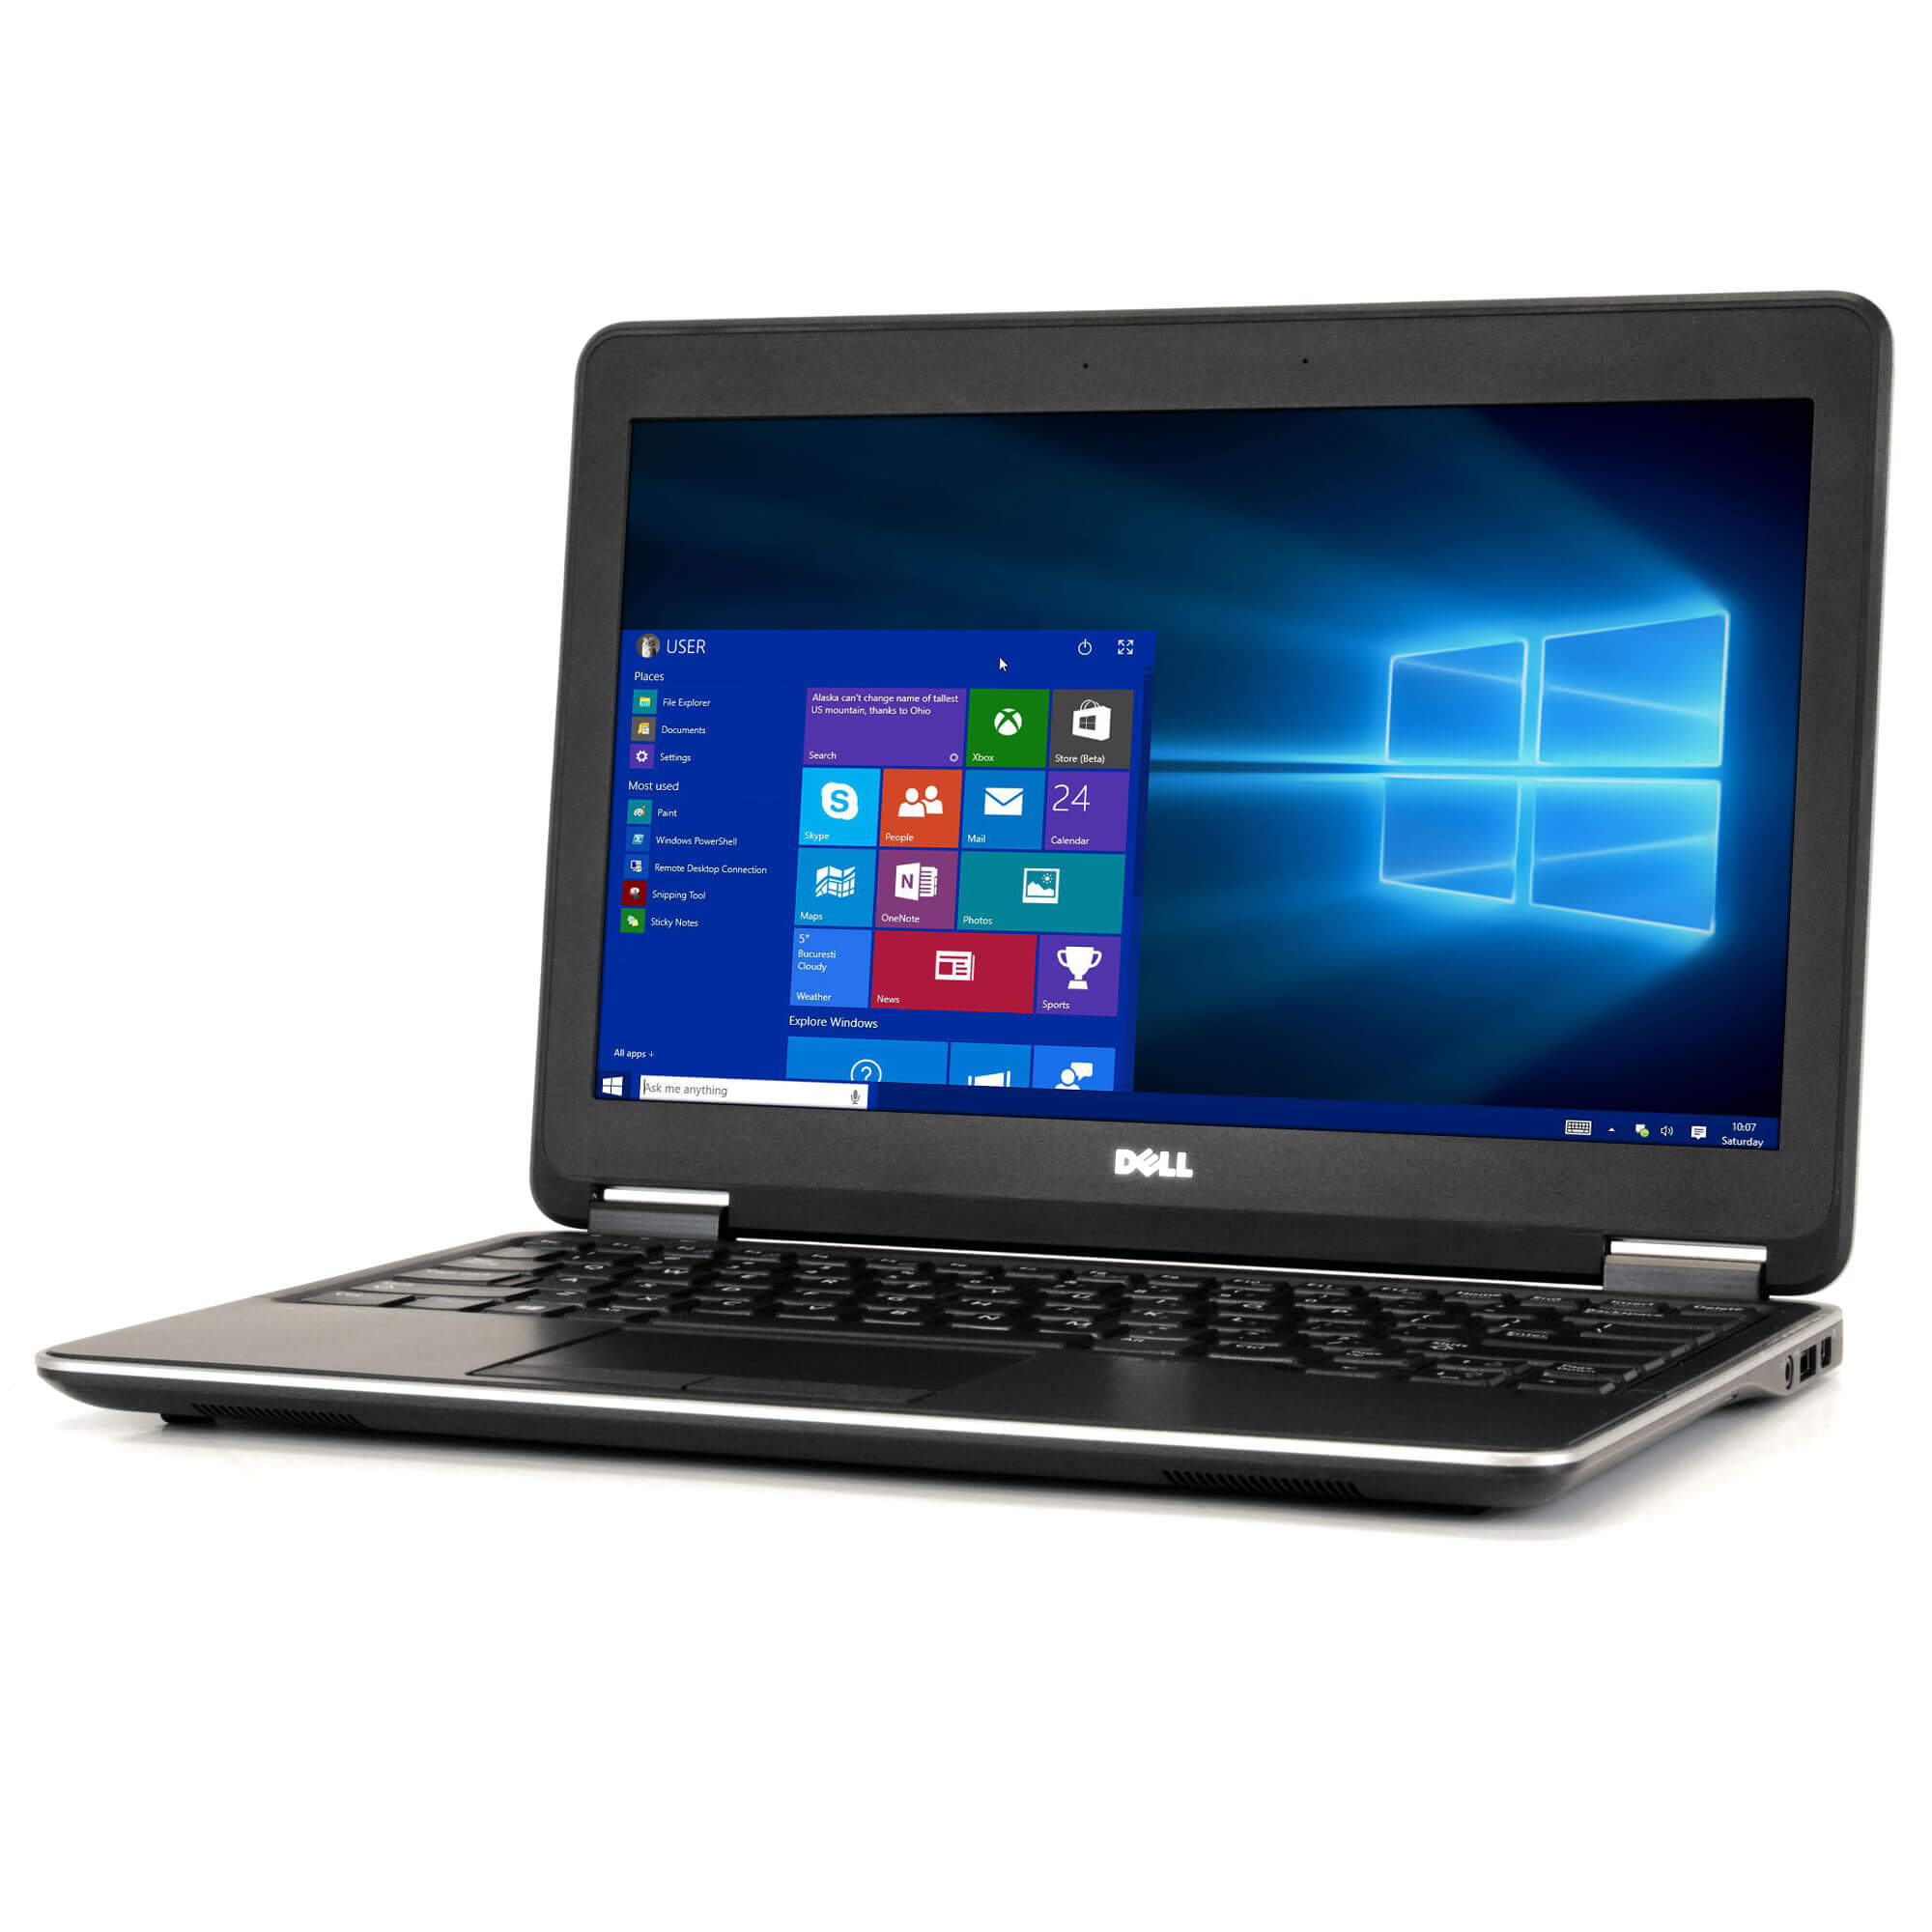 Dell Latitude E7440 Laptop Computer, 1.90 GHz Intel i5 Dual Core Gen 4, 4GB DDR3 RAM, 512GB Solid State Drive (SSD) SSD Hard Drive, Windows 10 Home 64Bit, 14" Screen (B GRADE) - image 3 of 8